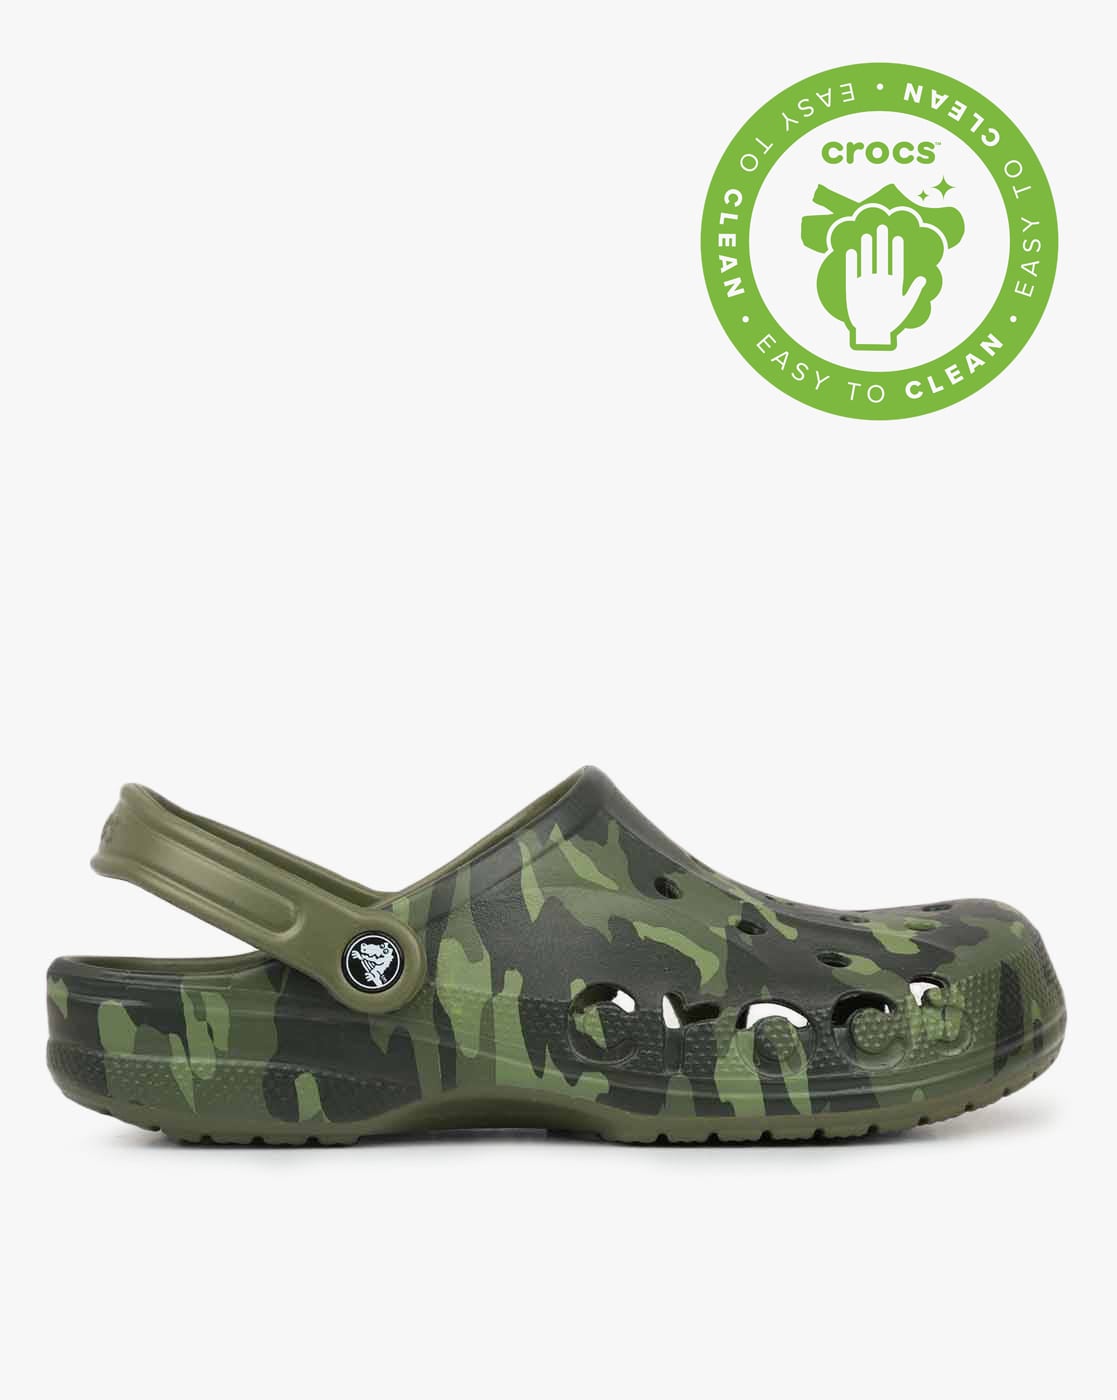 crocs military discount code